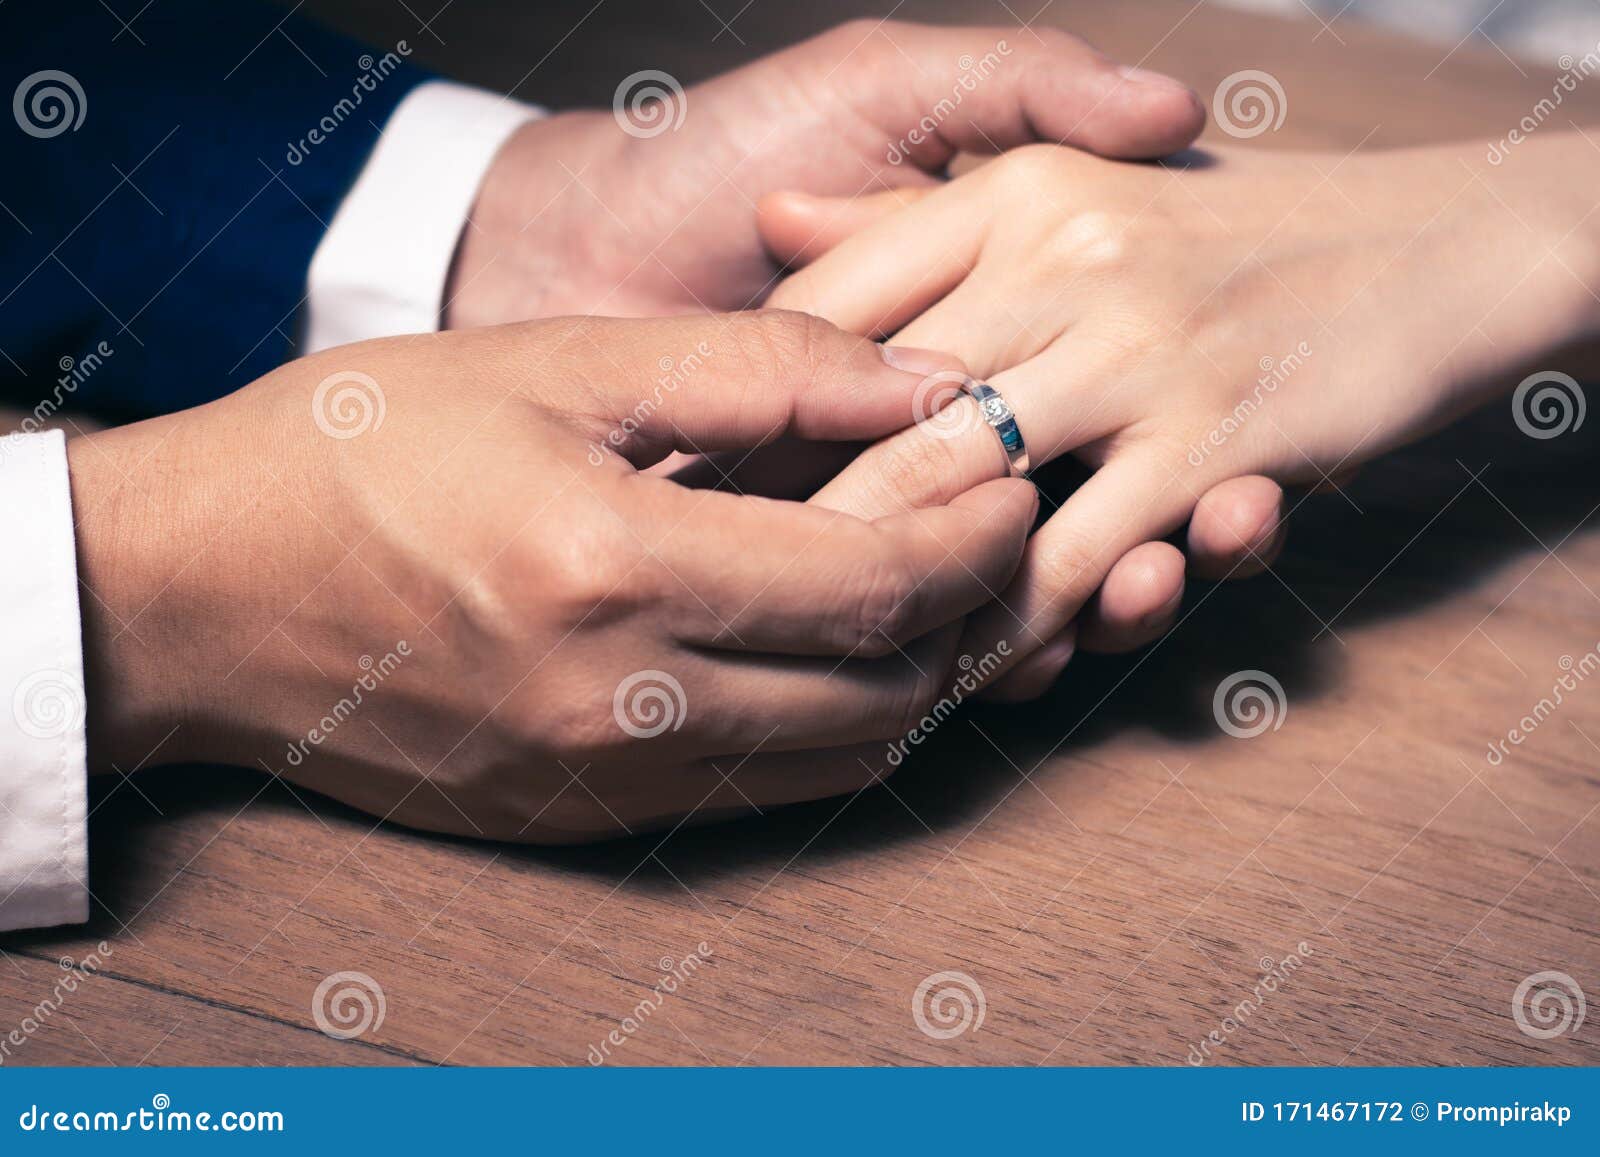 Groom Wearing Wedding Ring To Bride Finger 171467172 